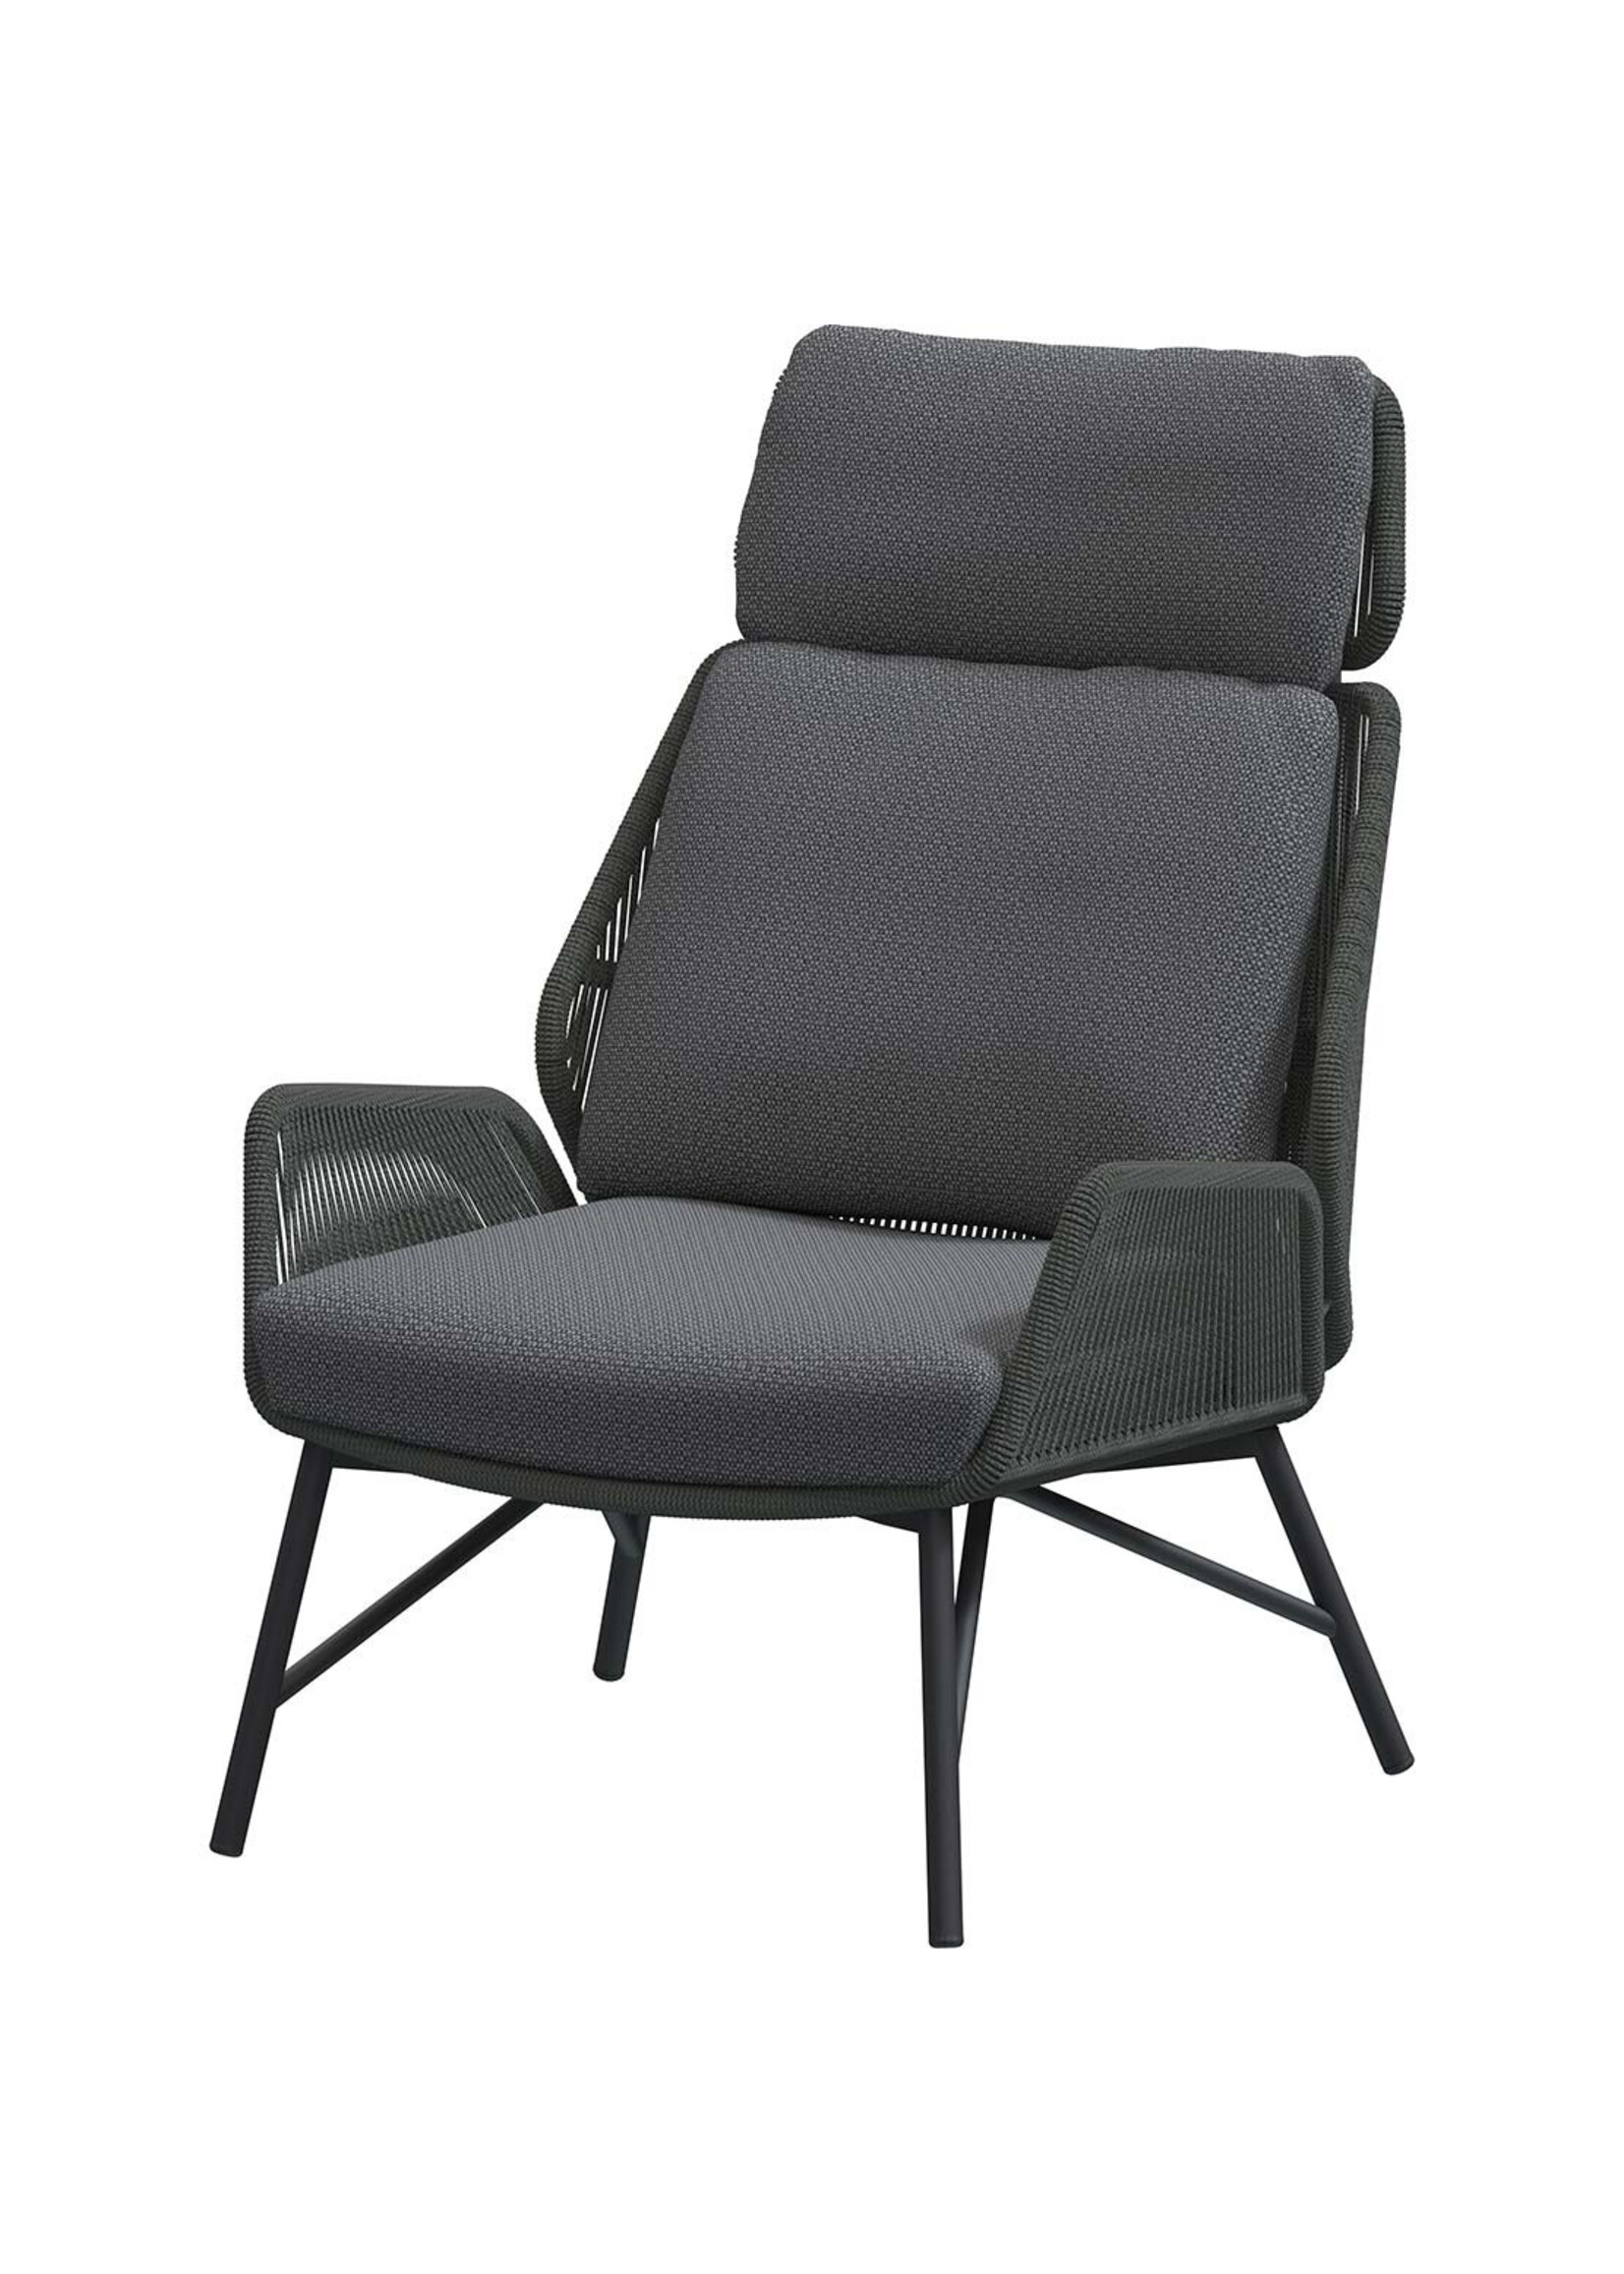 4SO 4SO Carthago living chair platinum with 2 cushions - SALE